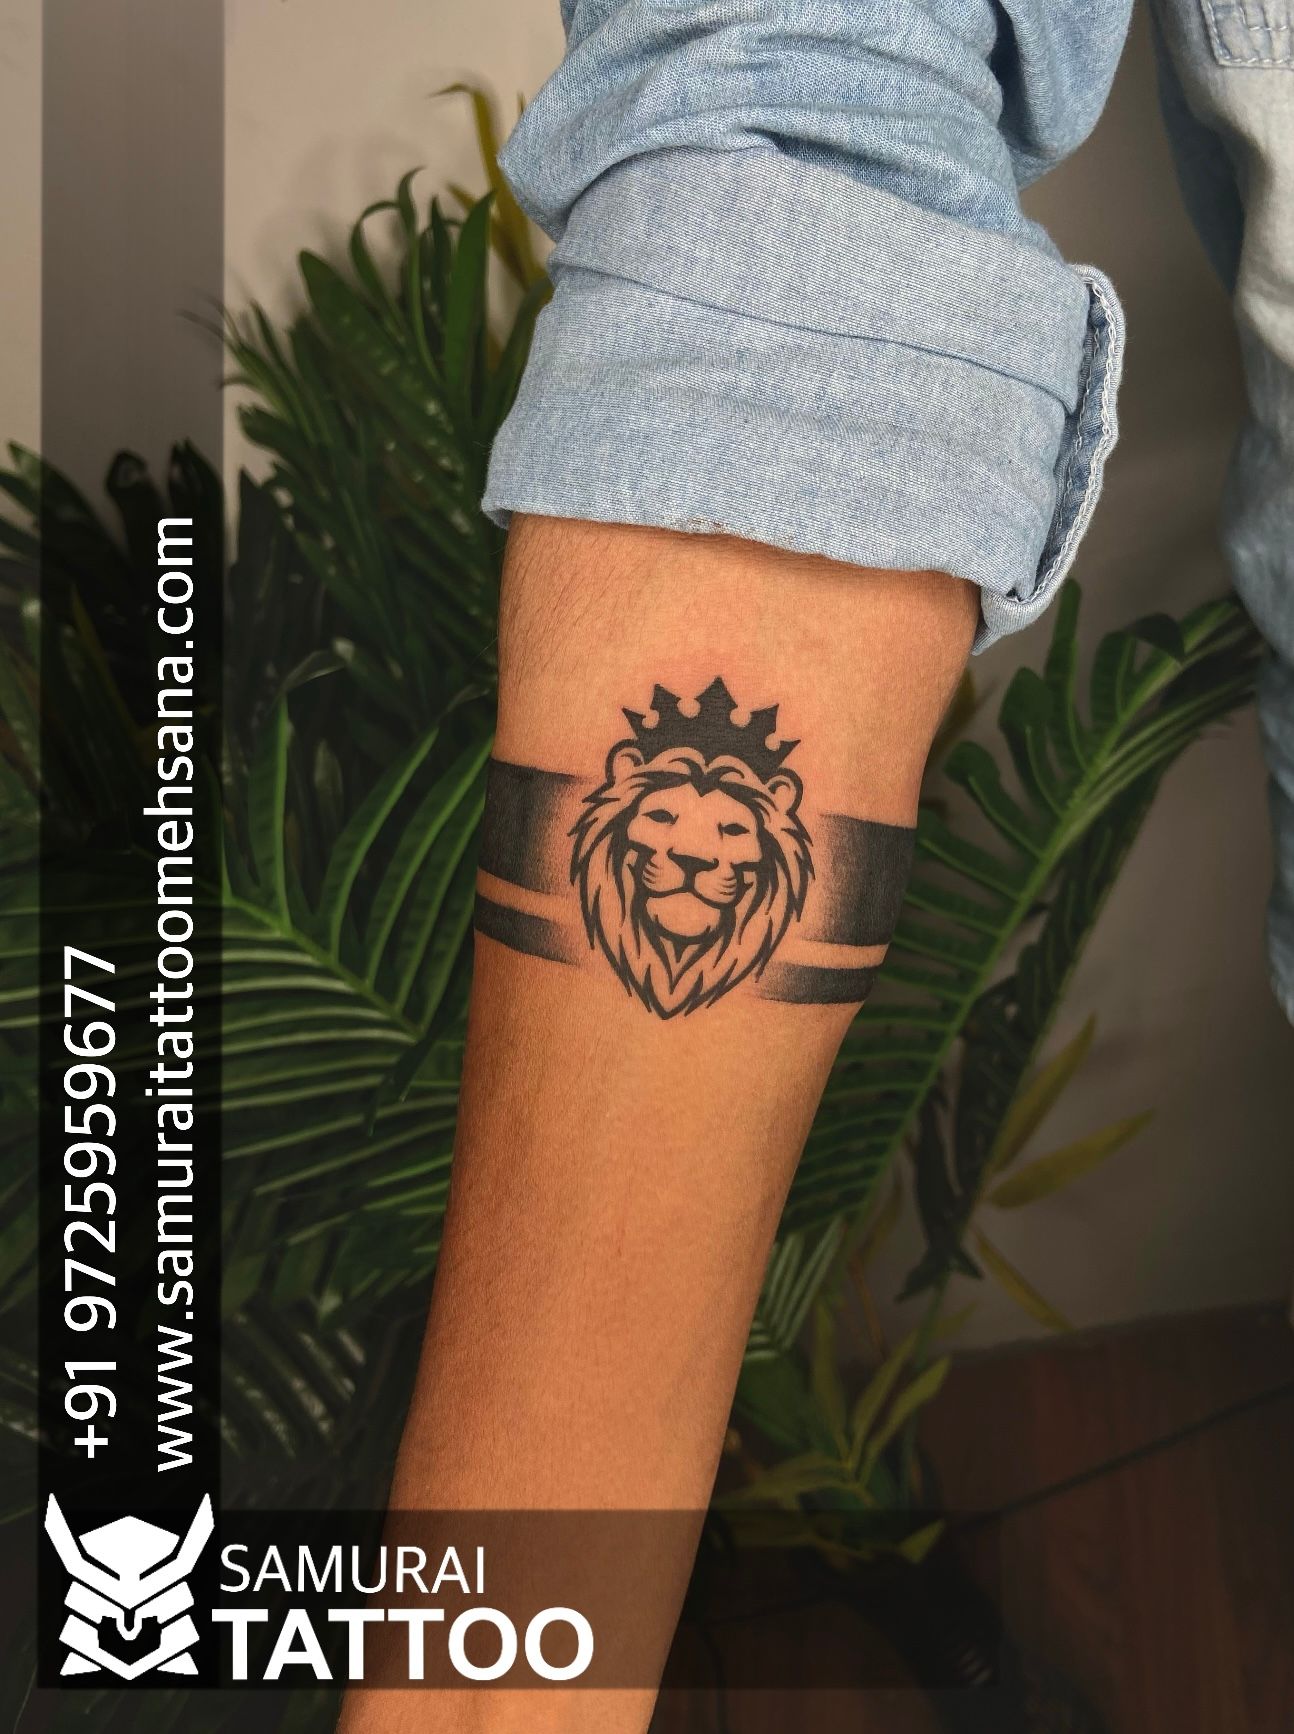 81132 Hand Tattoo Man Images Stock Photos  Vectors  Shutterstock